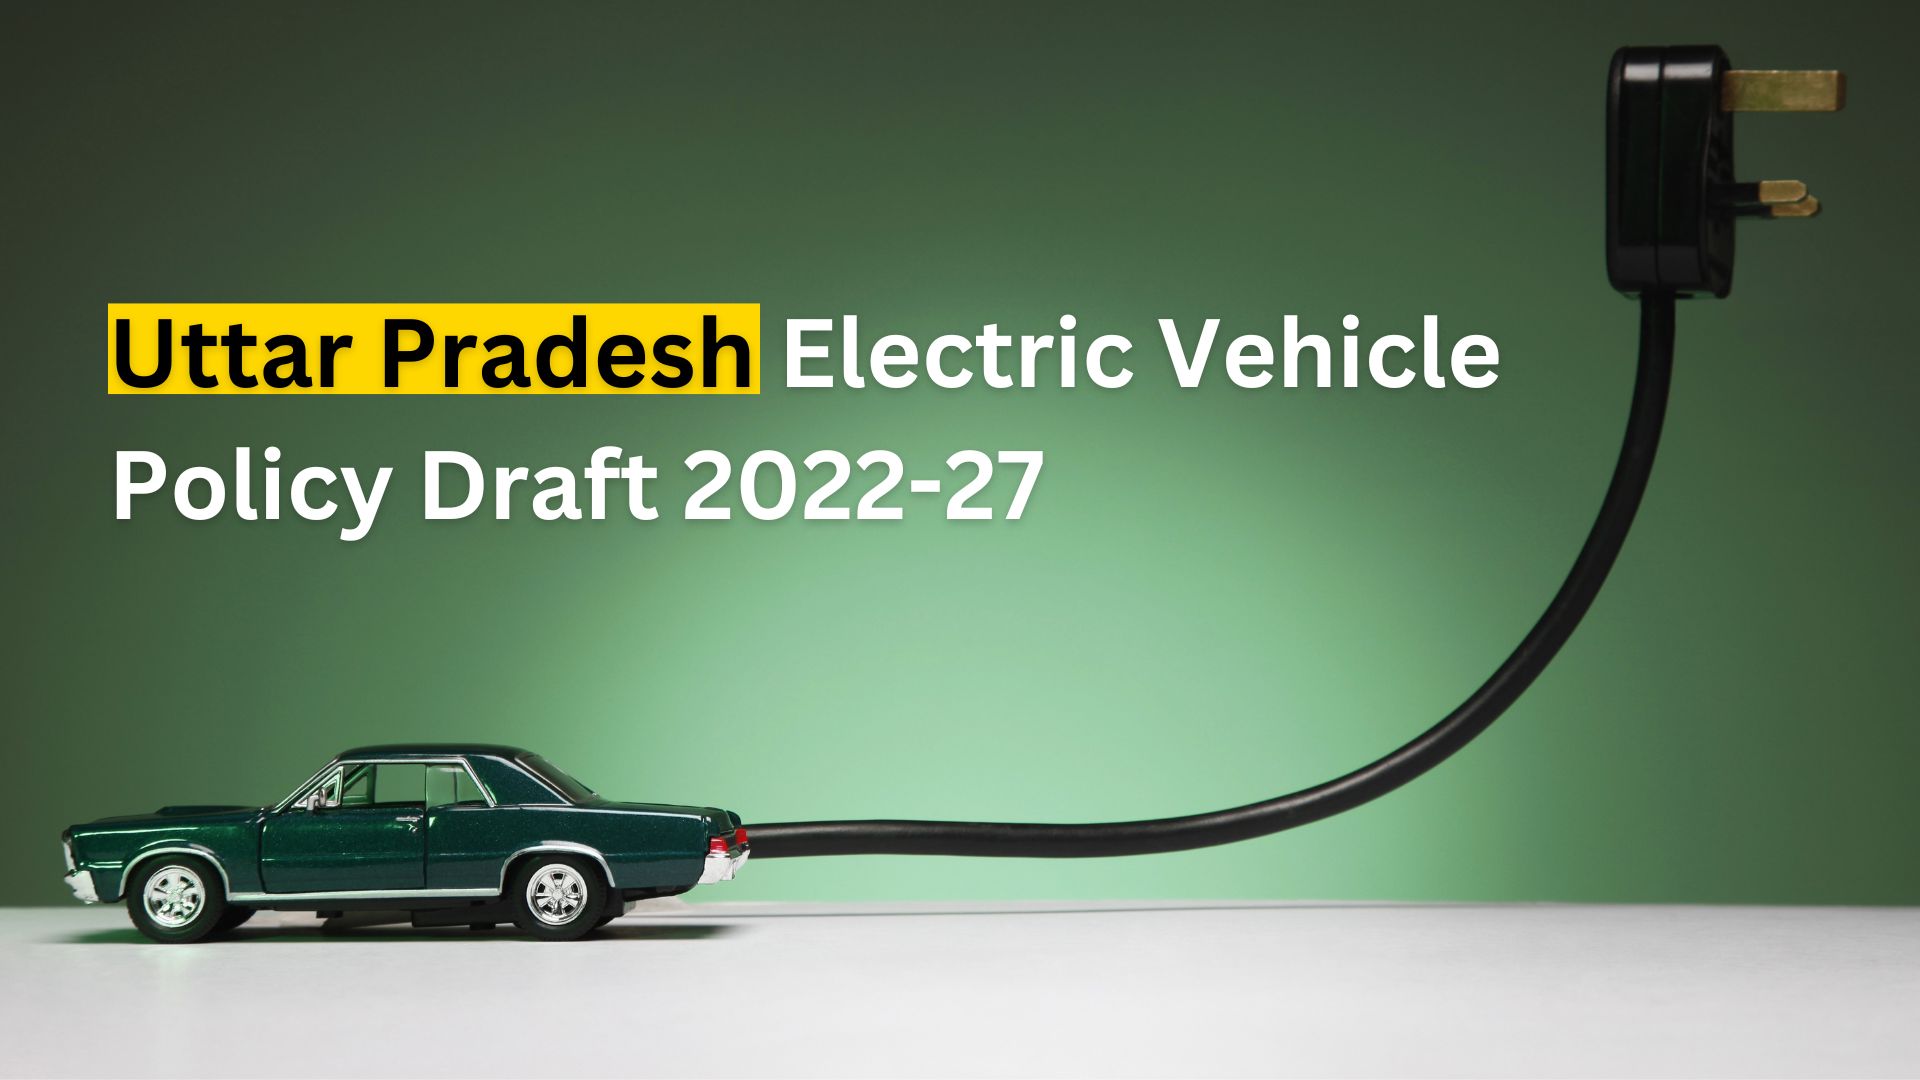 https://e-vehicleinfo.com/uttar-pradesh-electric-vehicle-policy-draft-2022-2027/